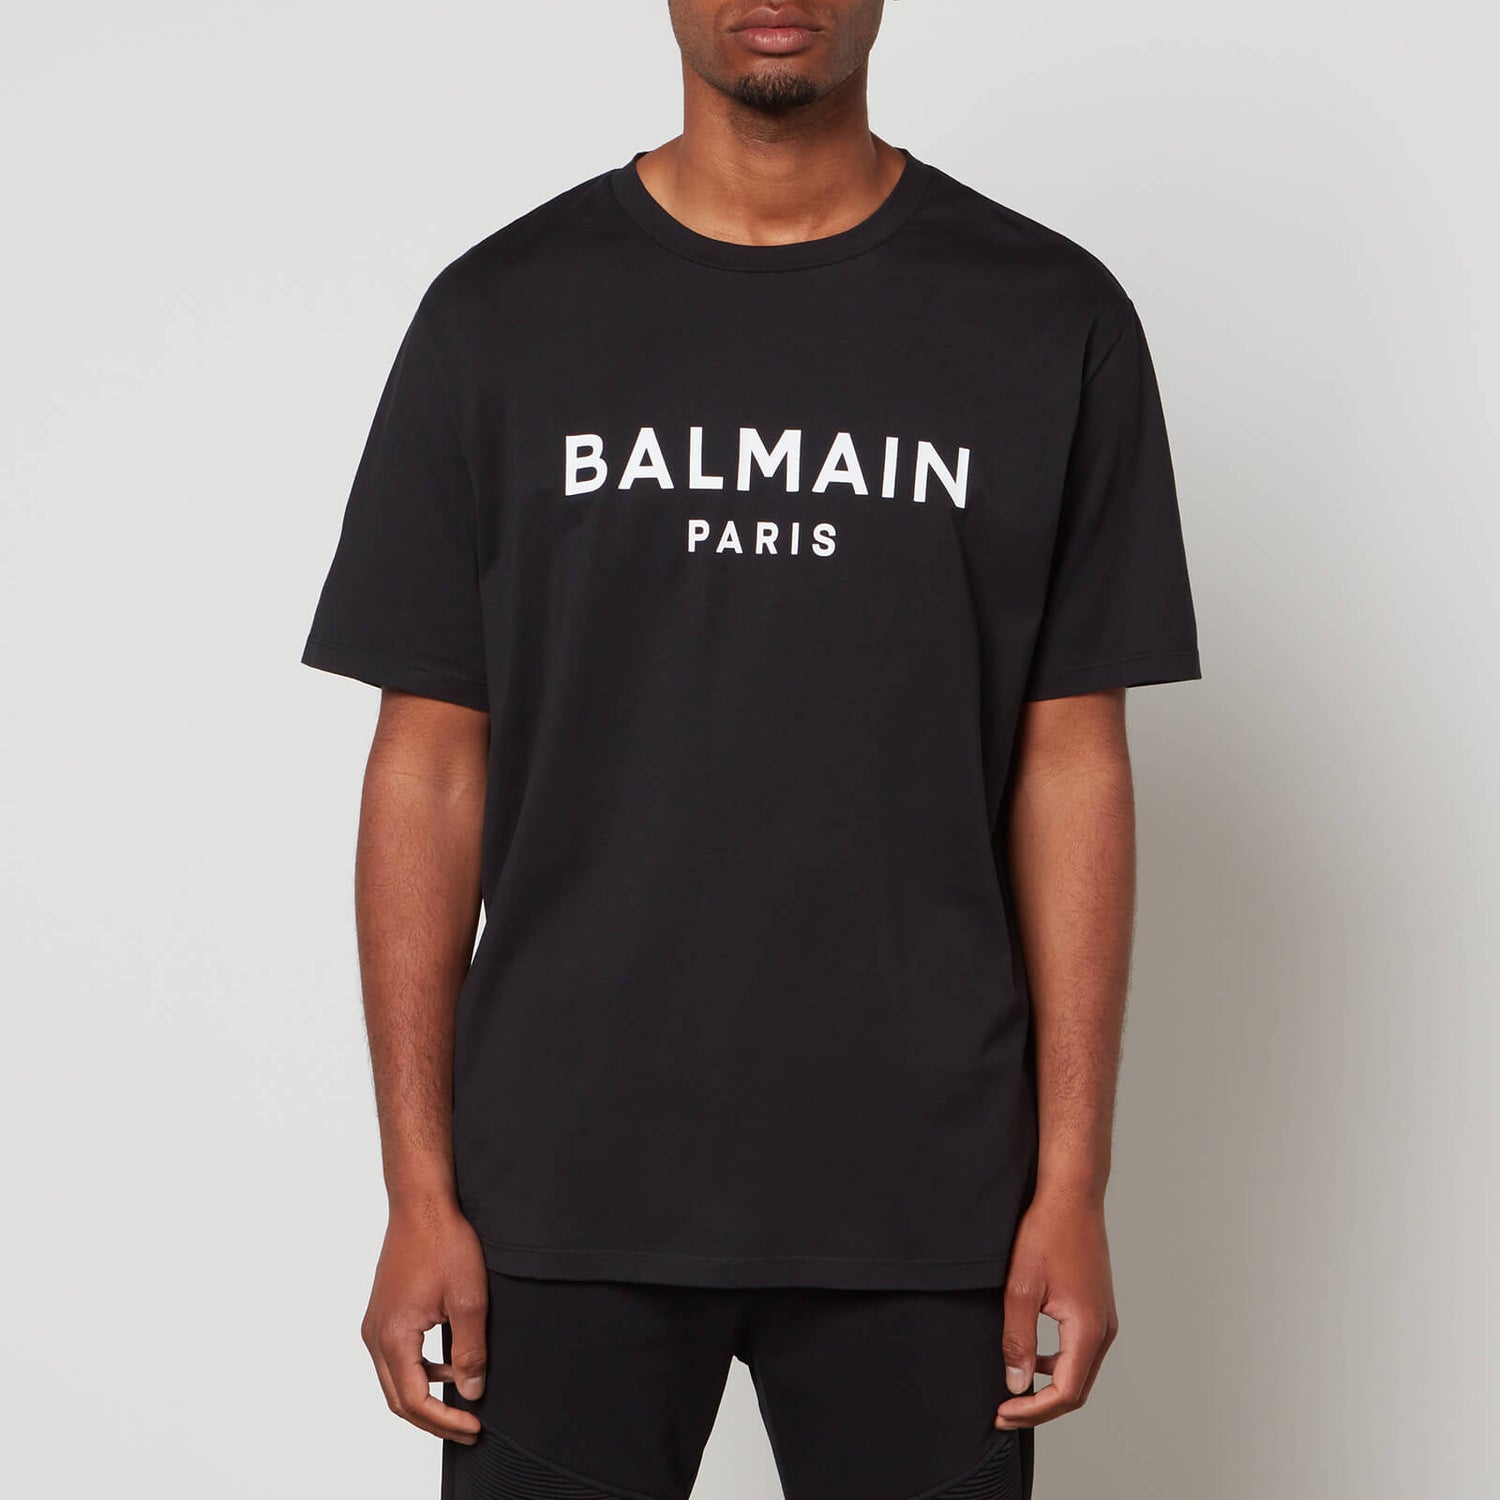 Balmain Men's Straight Fit Printed T-Shirt - Black/White - S